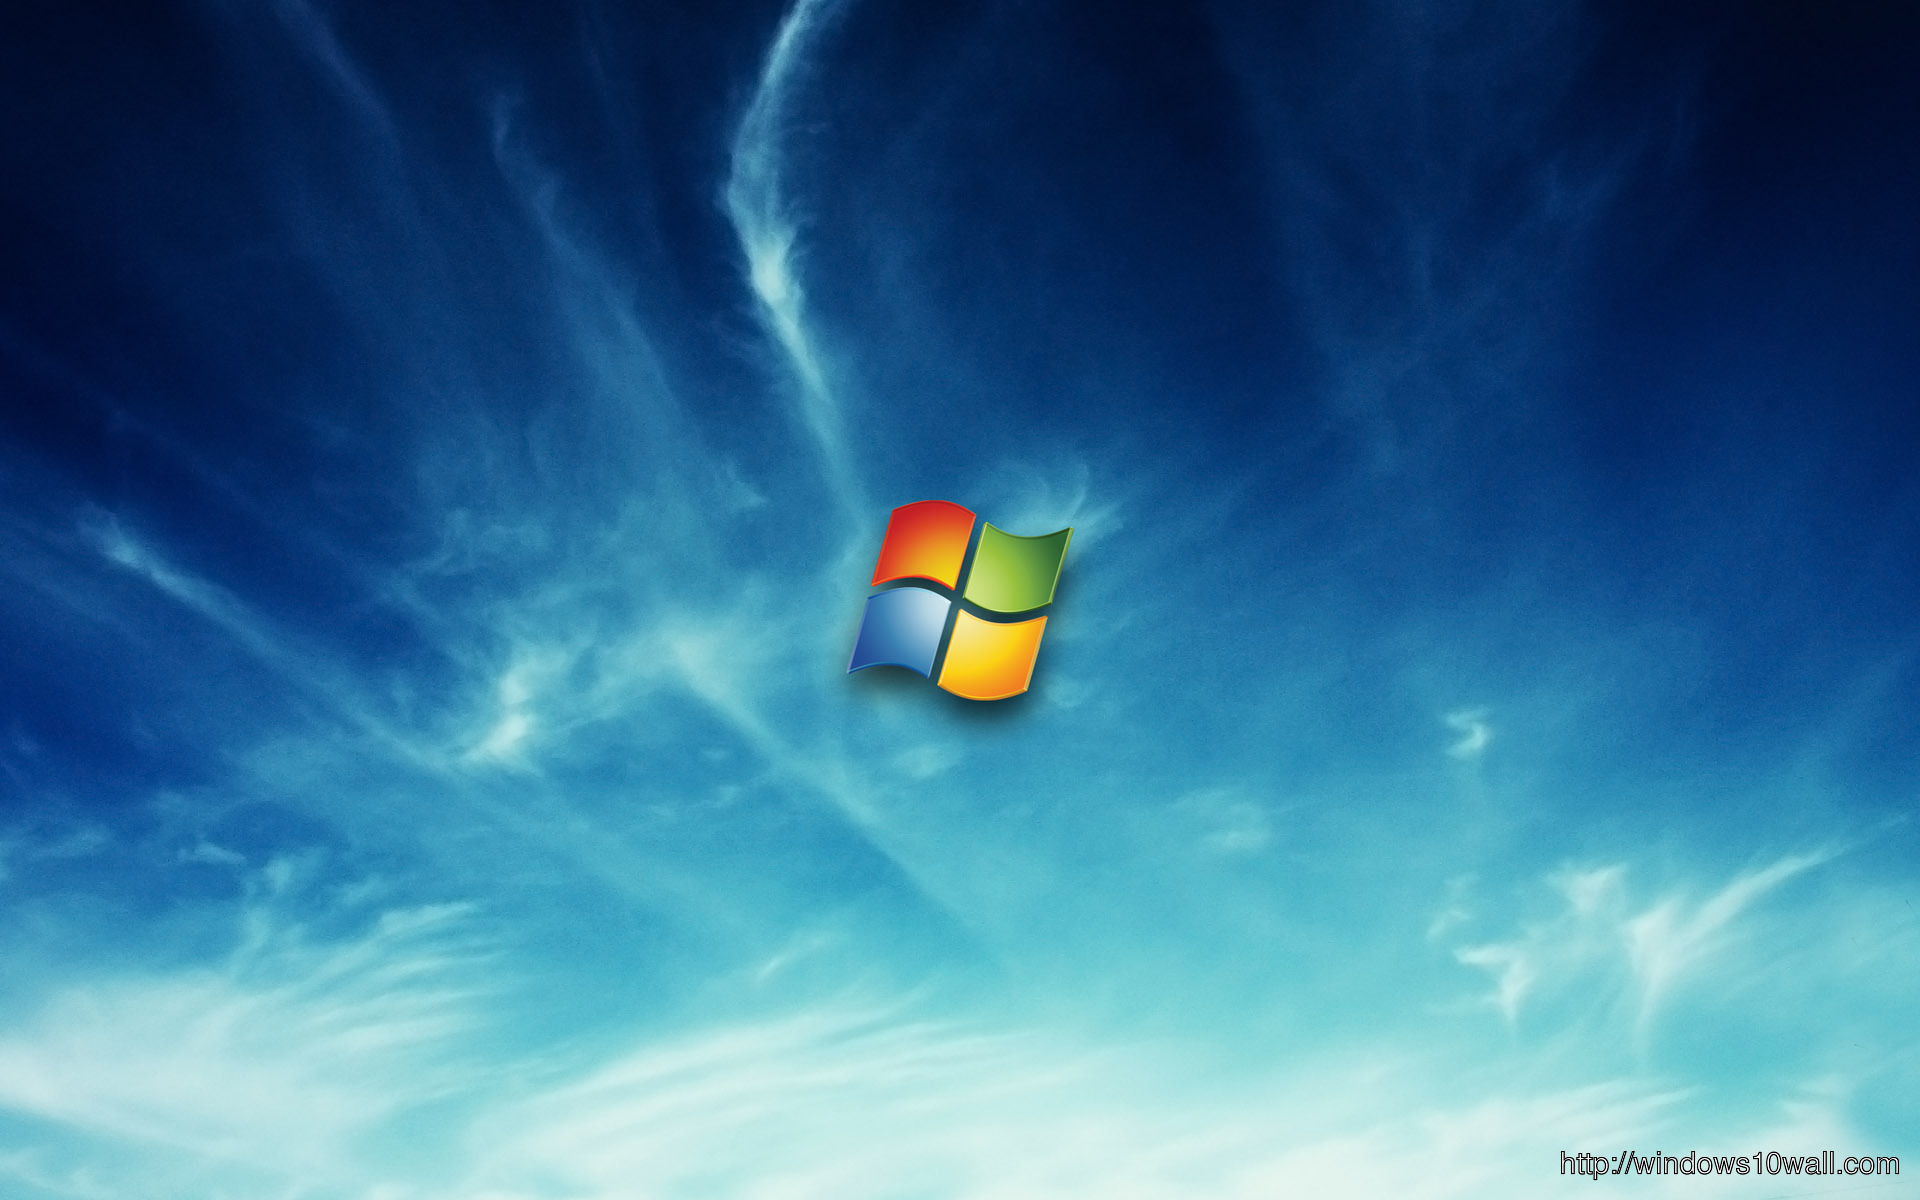 Wallpaper Windows 7